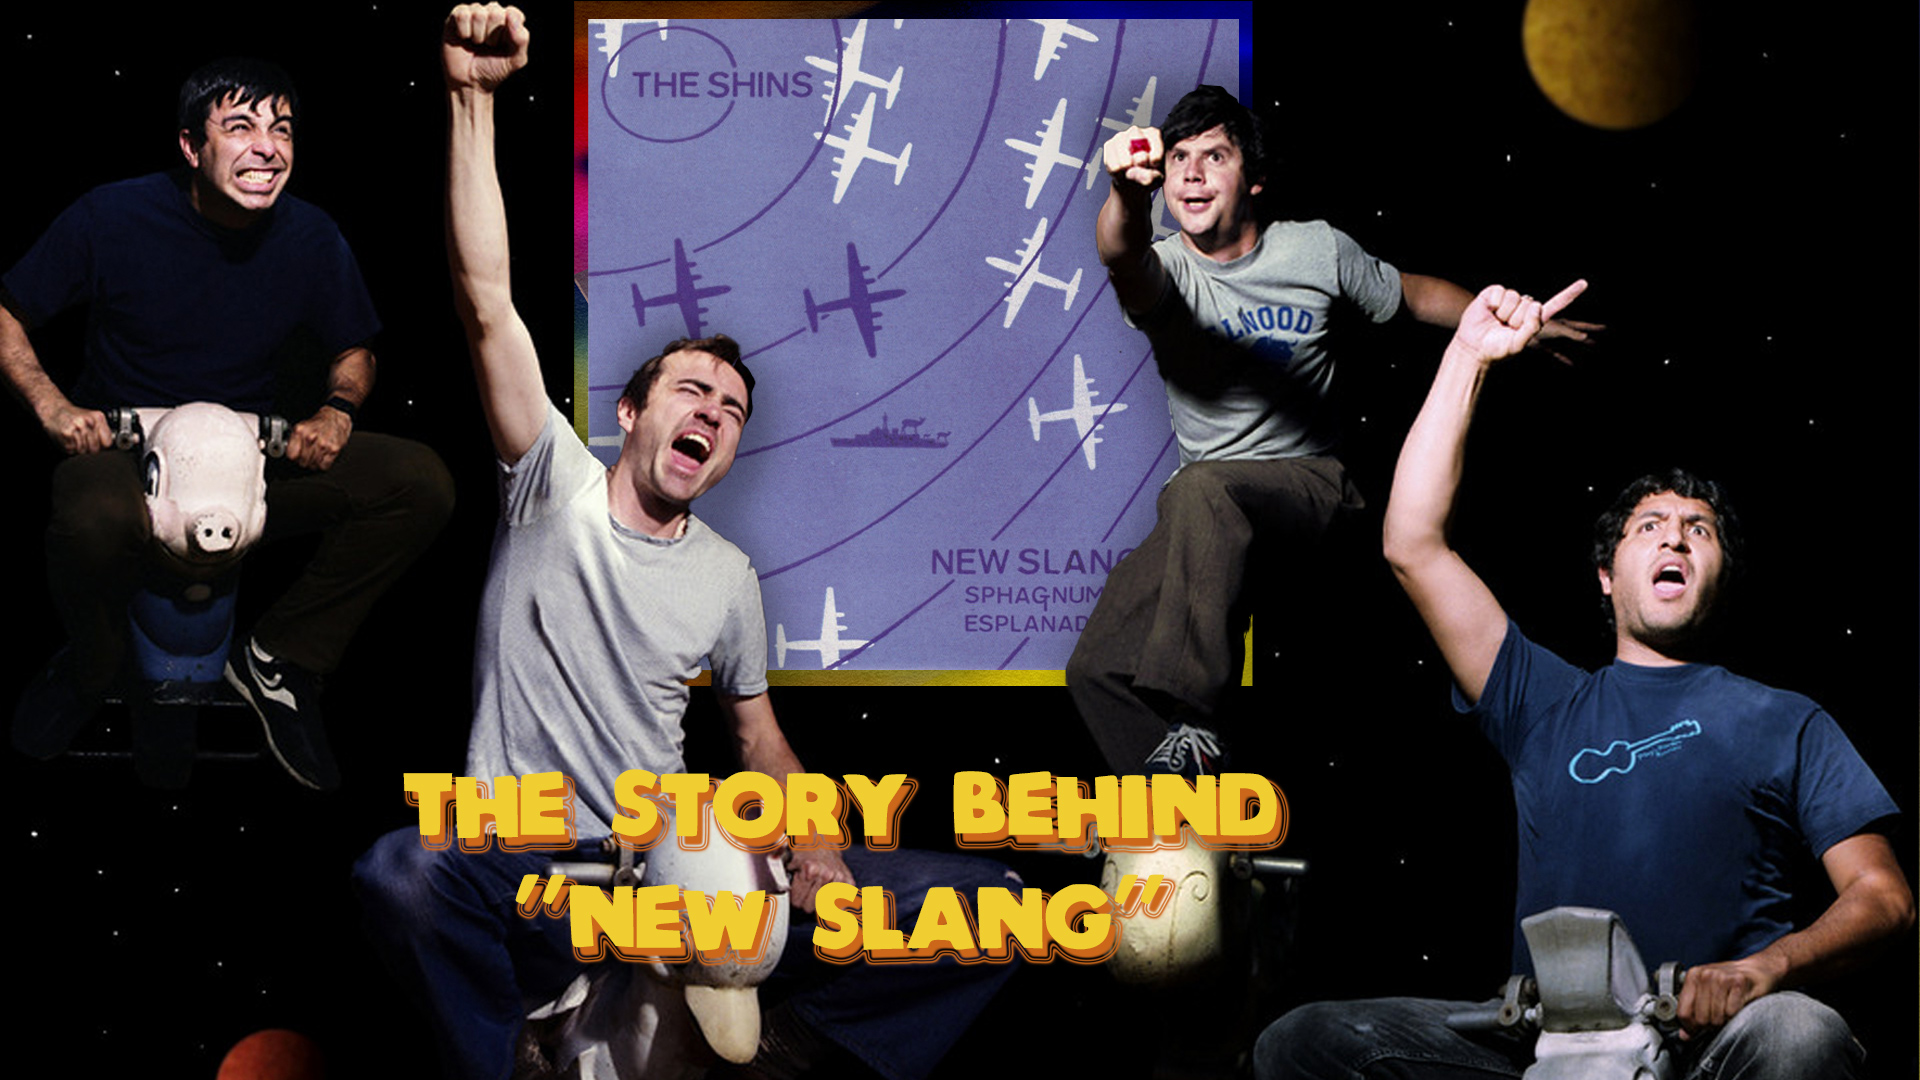 The Story Behind The Shins' "New Slang"